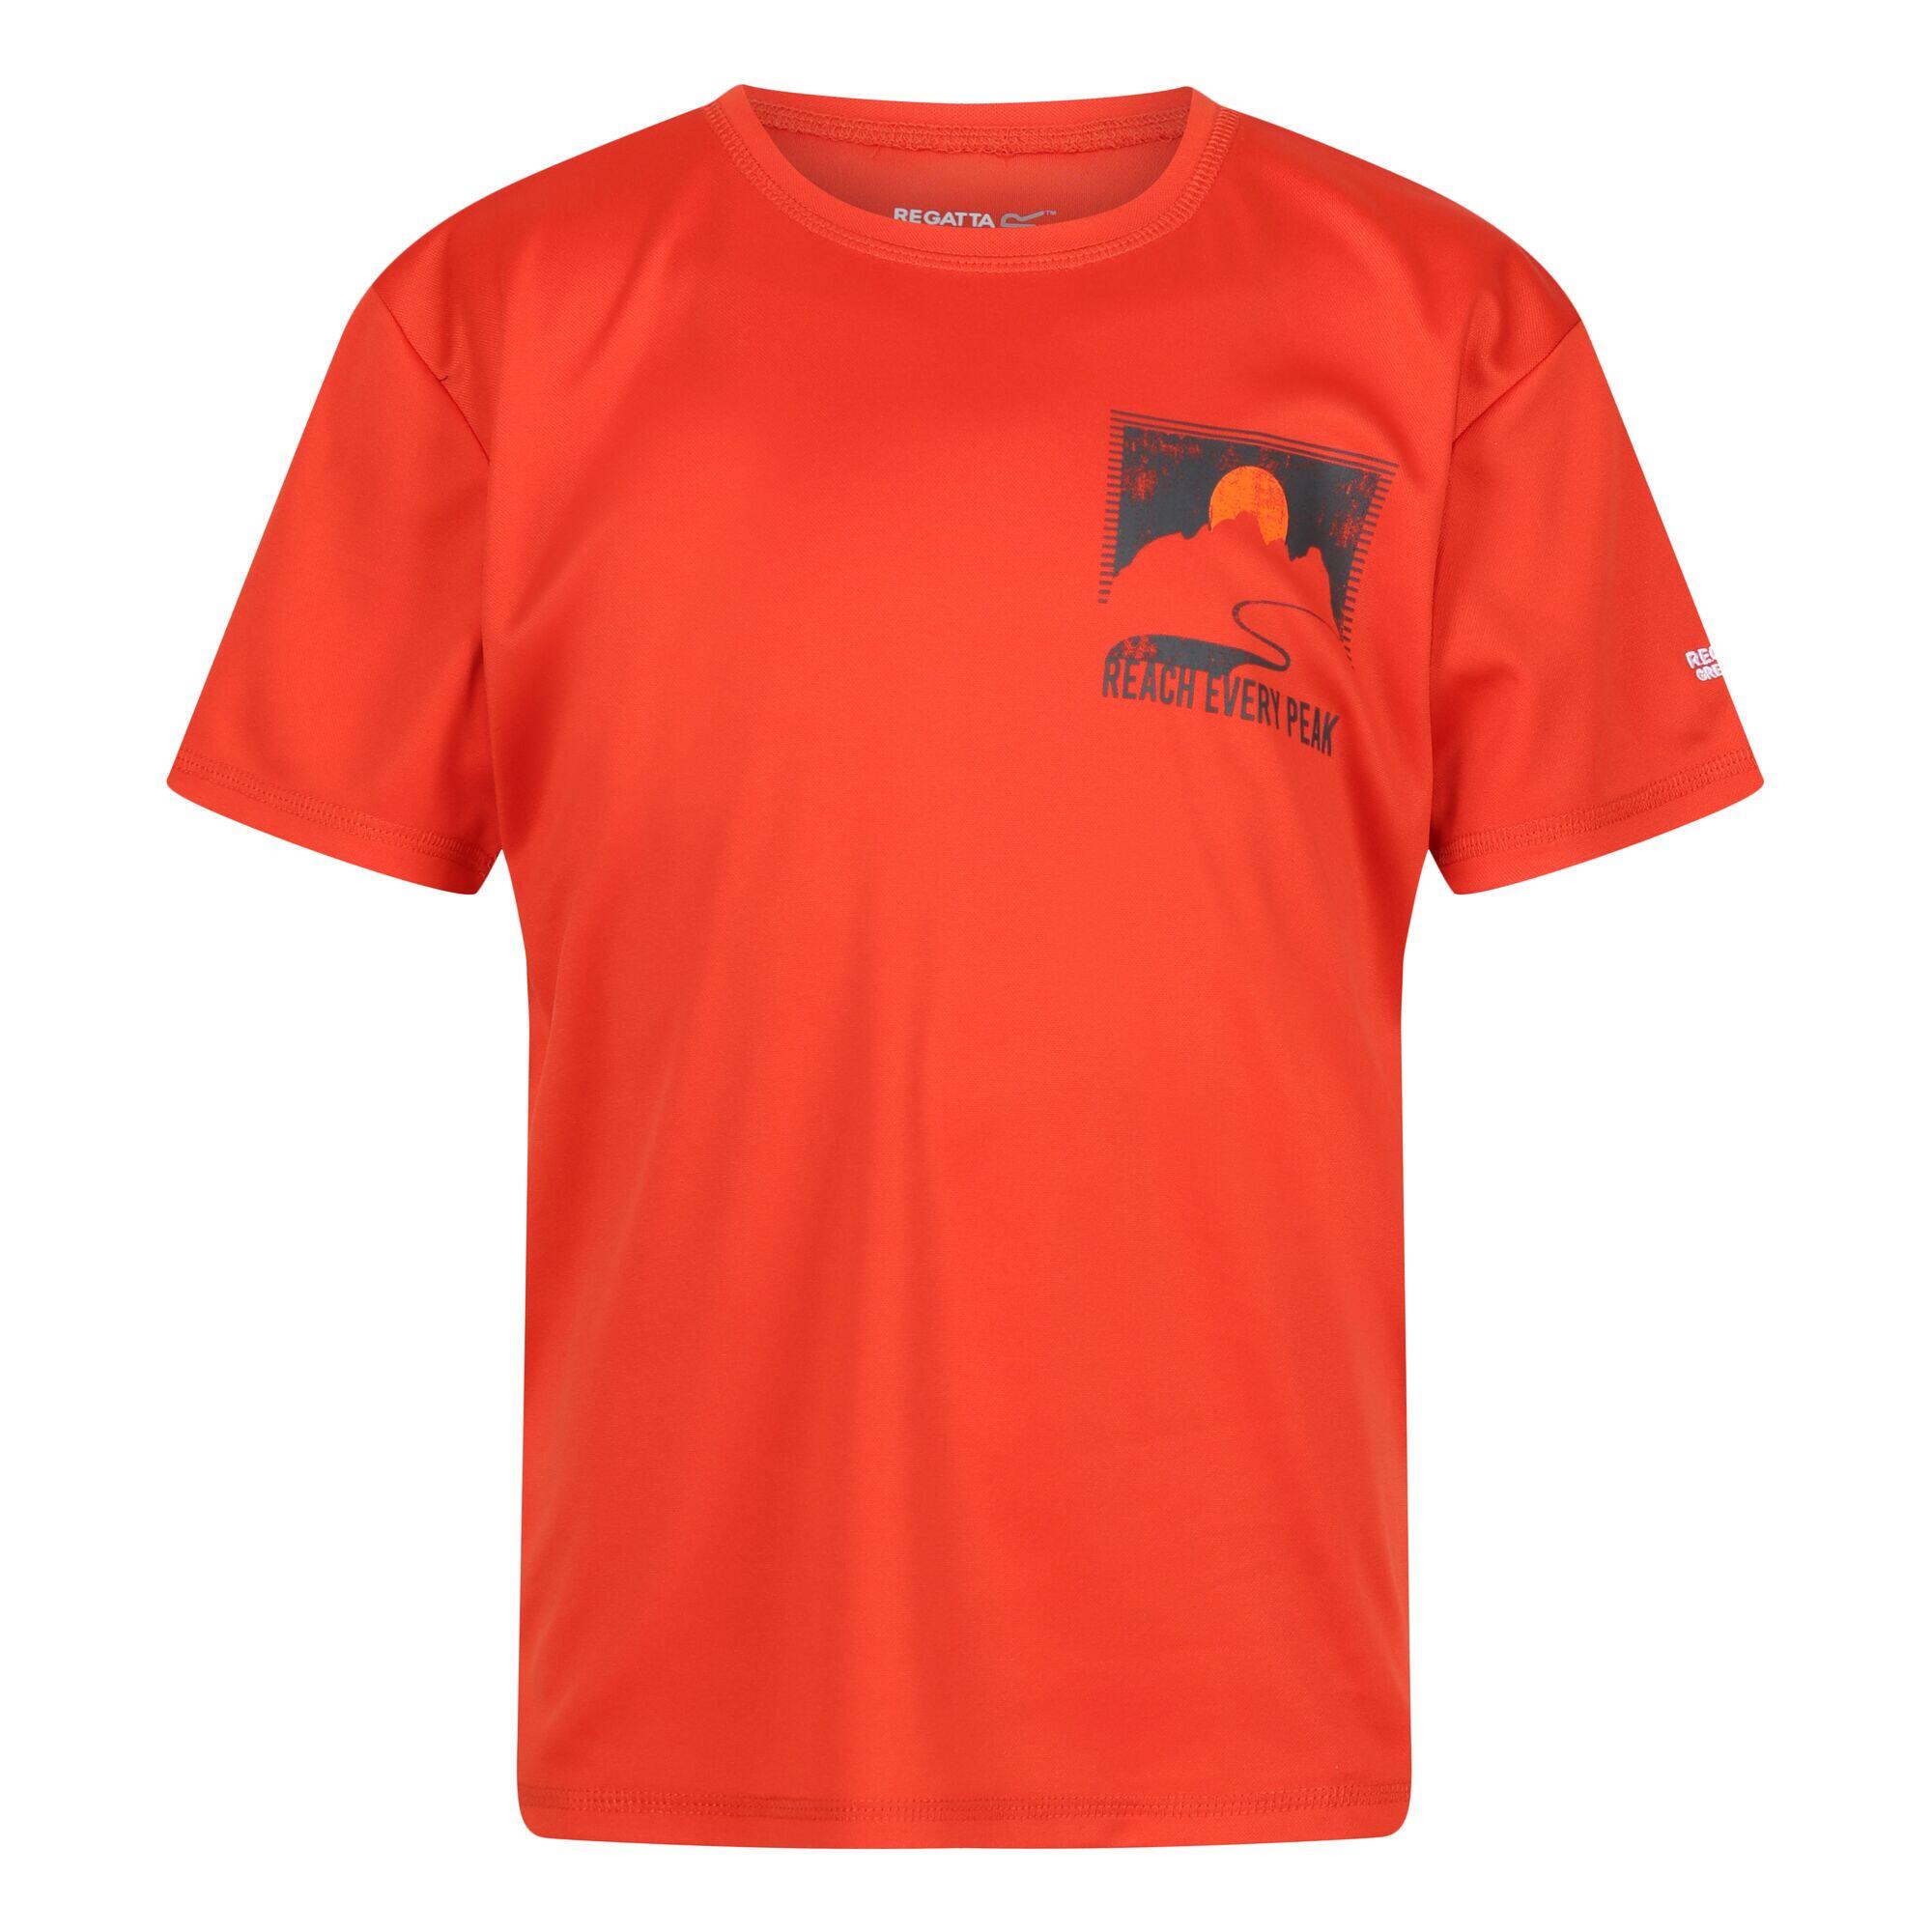 REGATTA Childrens/Kids Alvarado VII Sunset TShirt (Rusty Orange)